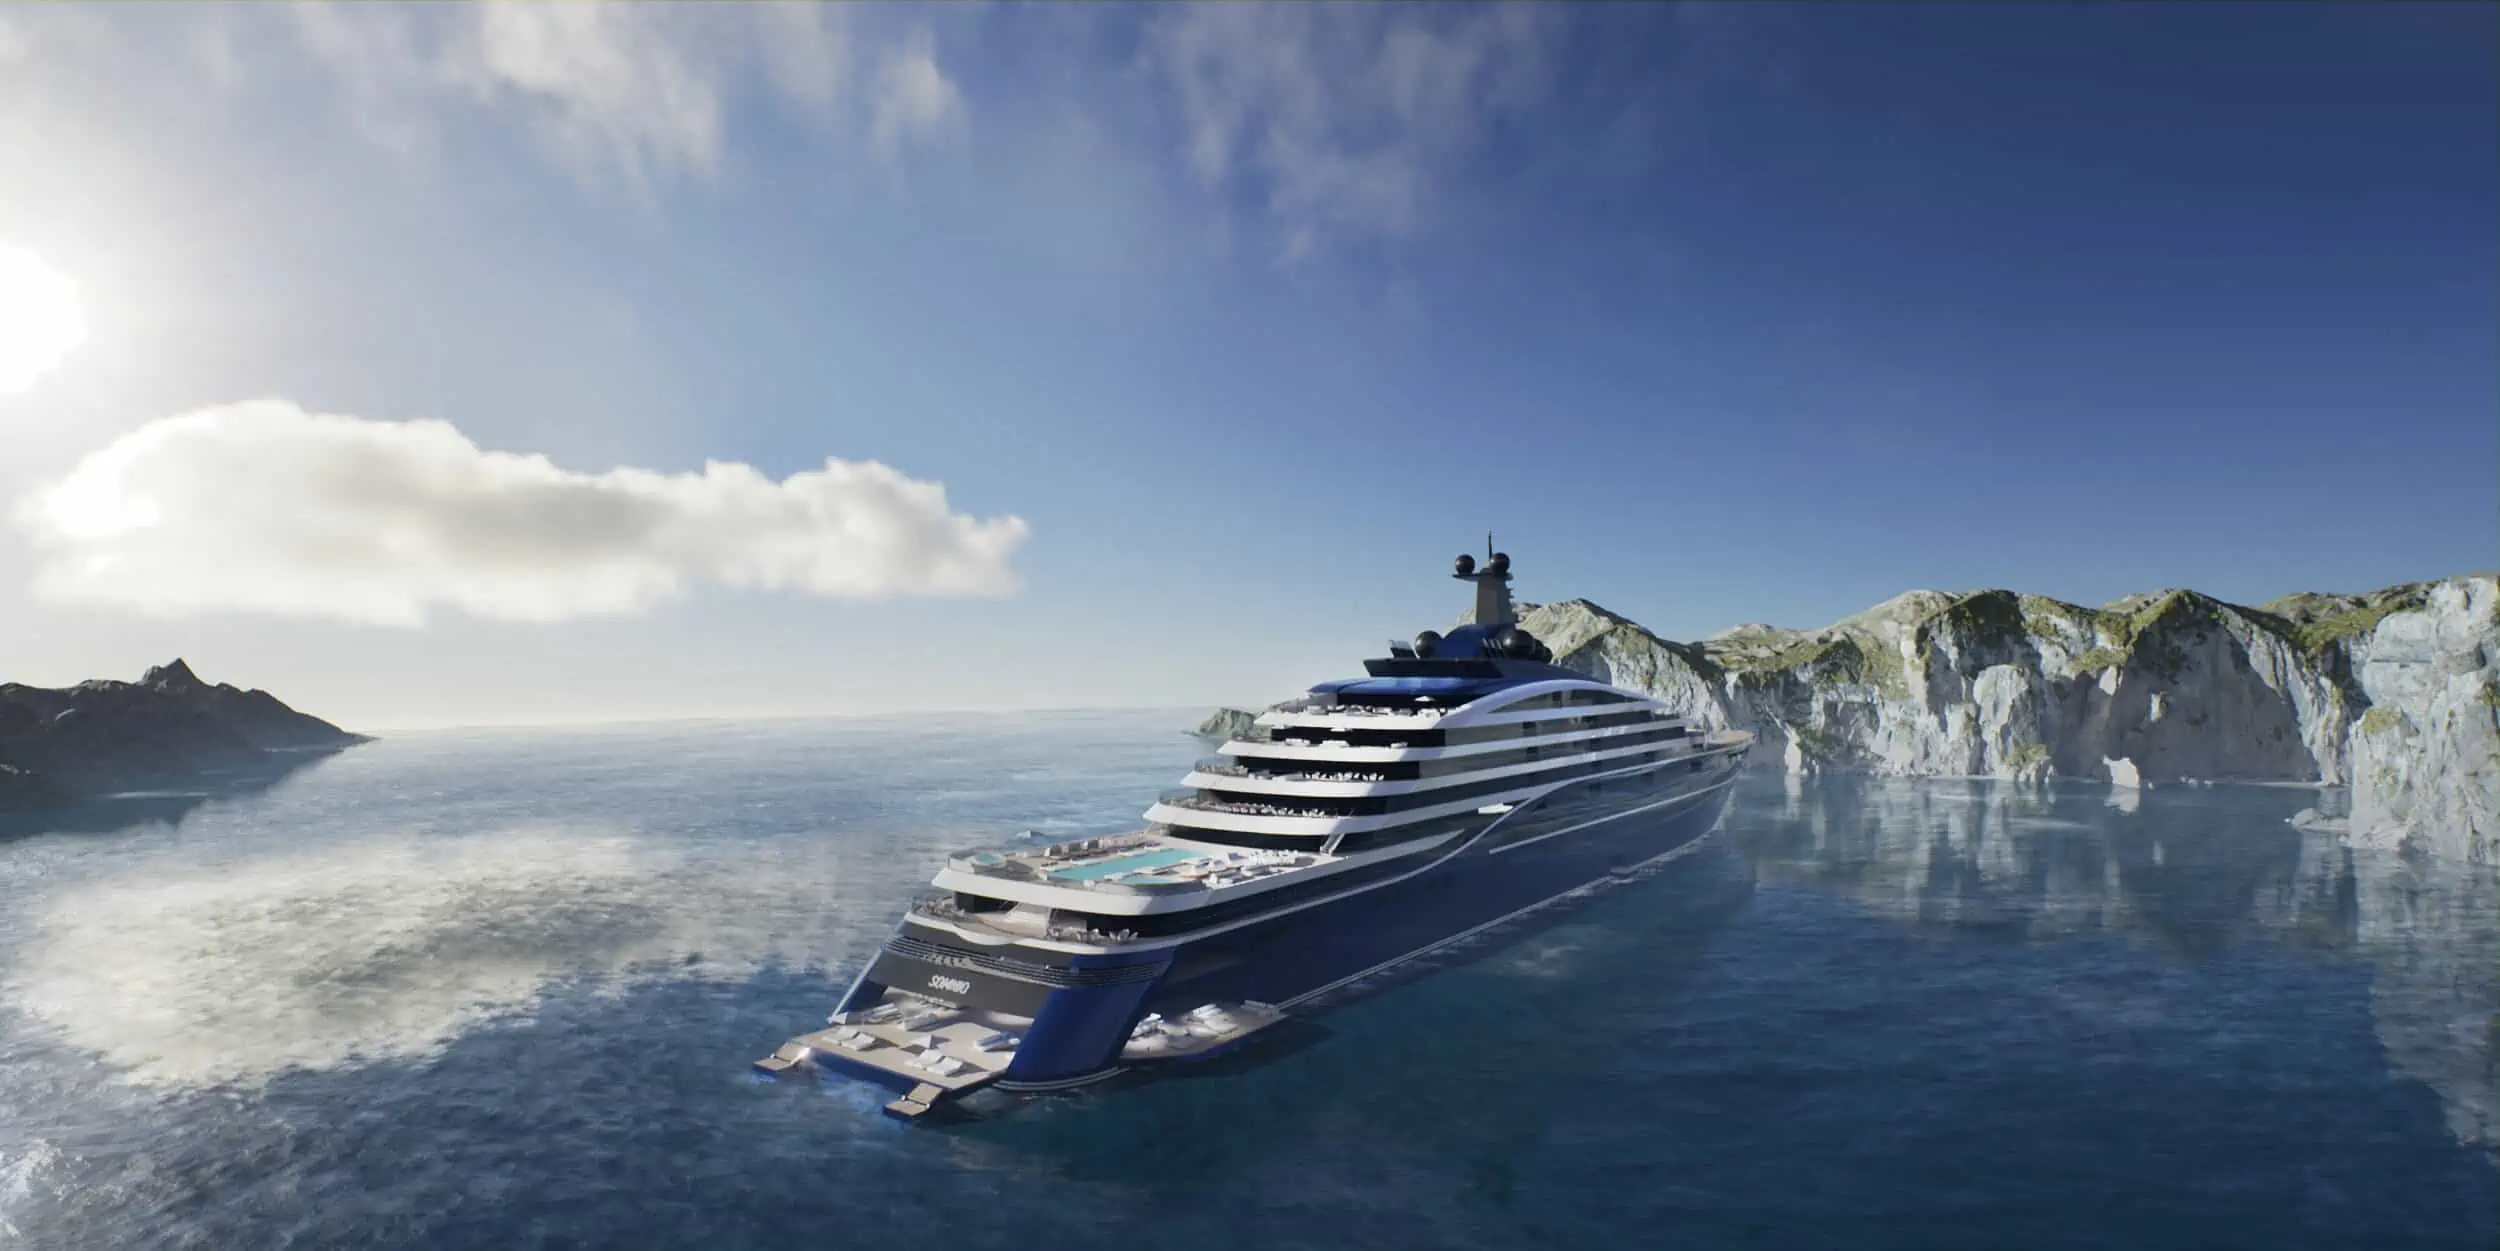 Somnio cruise ship on water